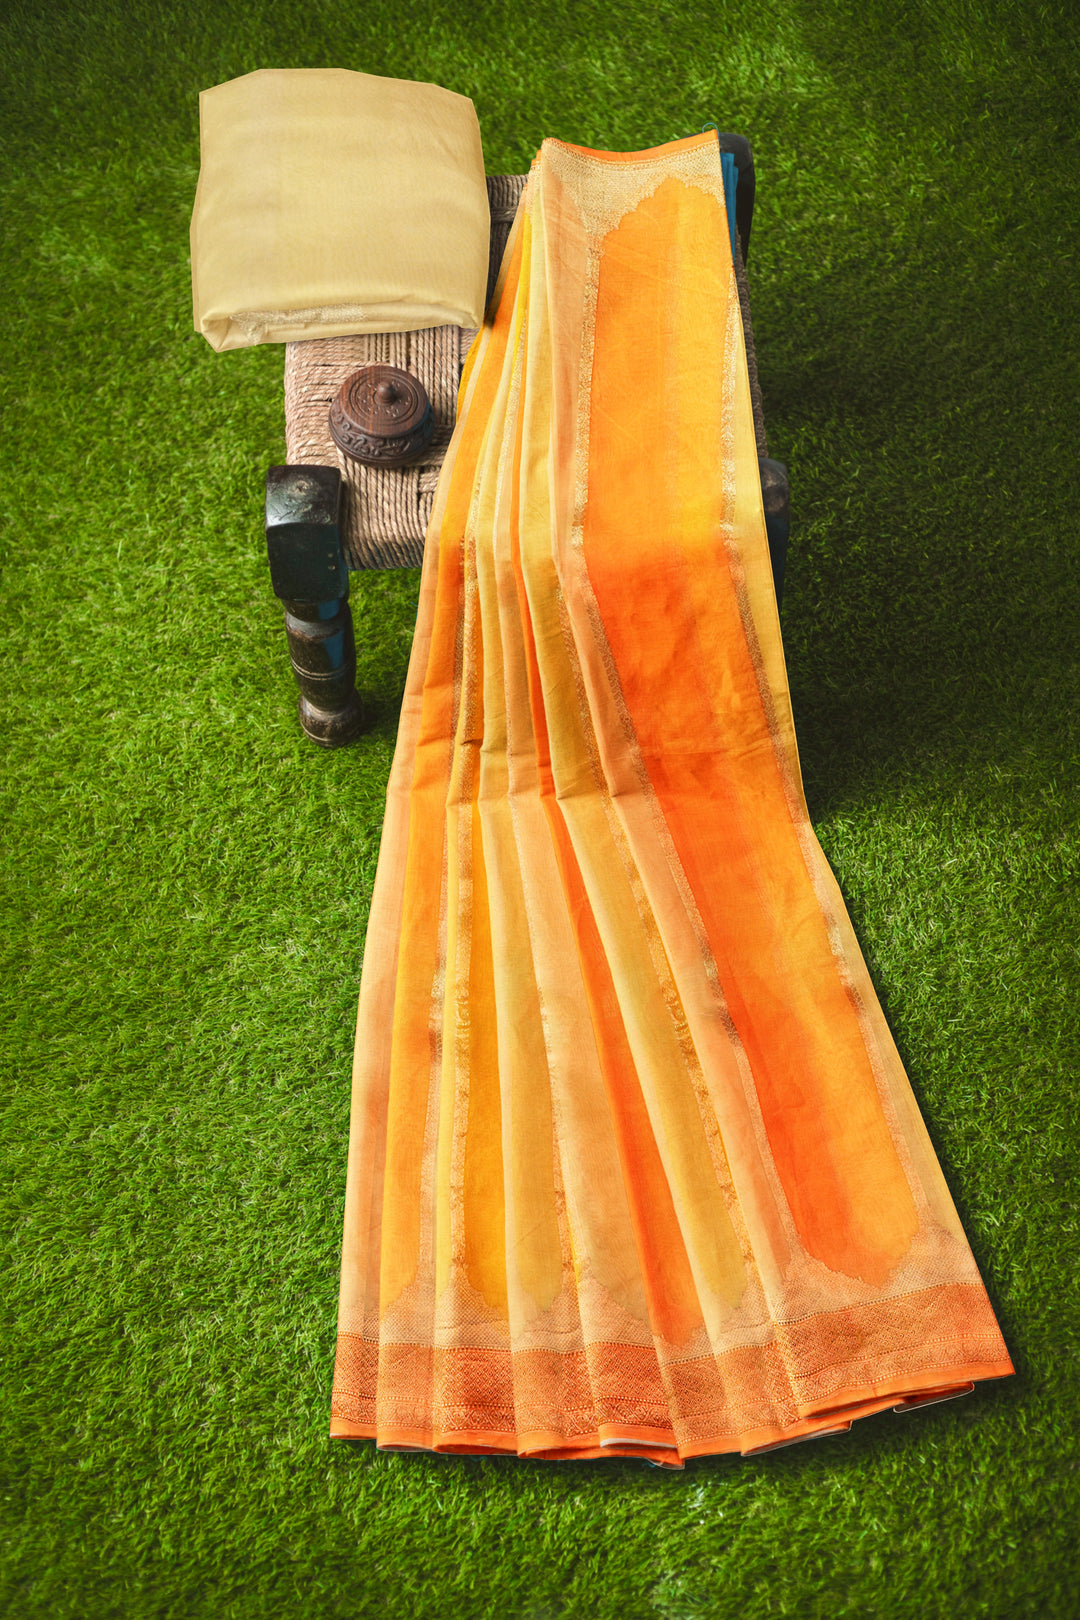 Pastel Orange Rangkat Khaddi Georgette Handloom Banarasi Saree | SILK MARK CERTIFIED